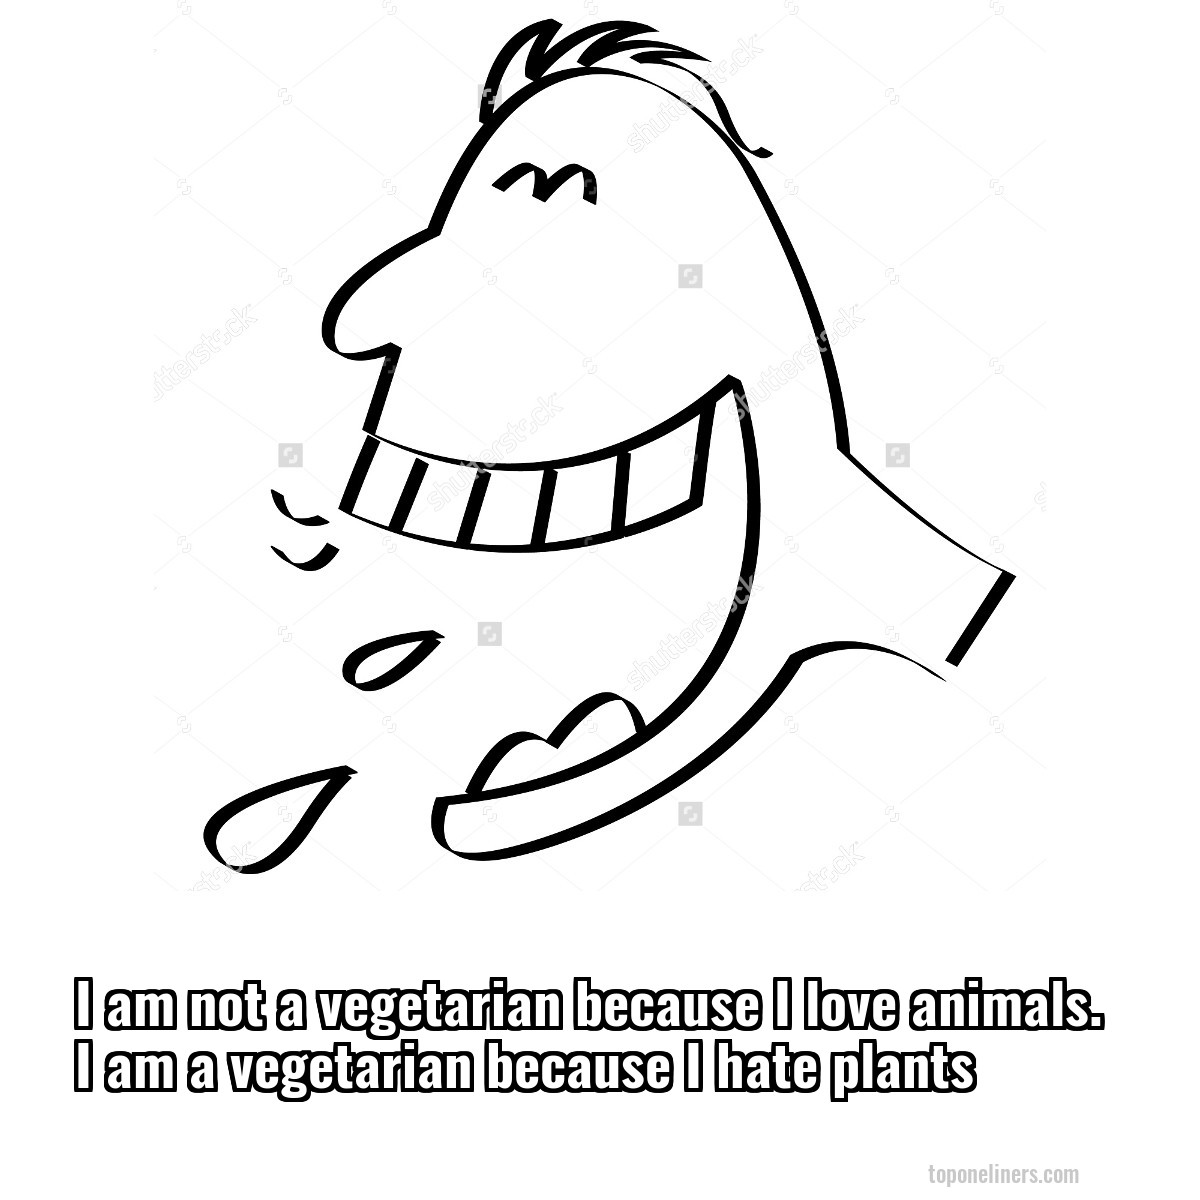 I am not a vegetarian because I love animals. I am a vegetarian because I hate plants
